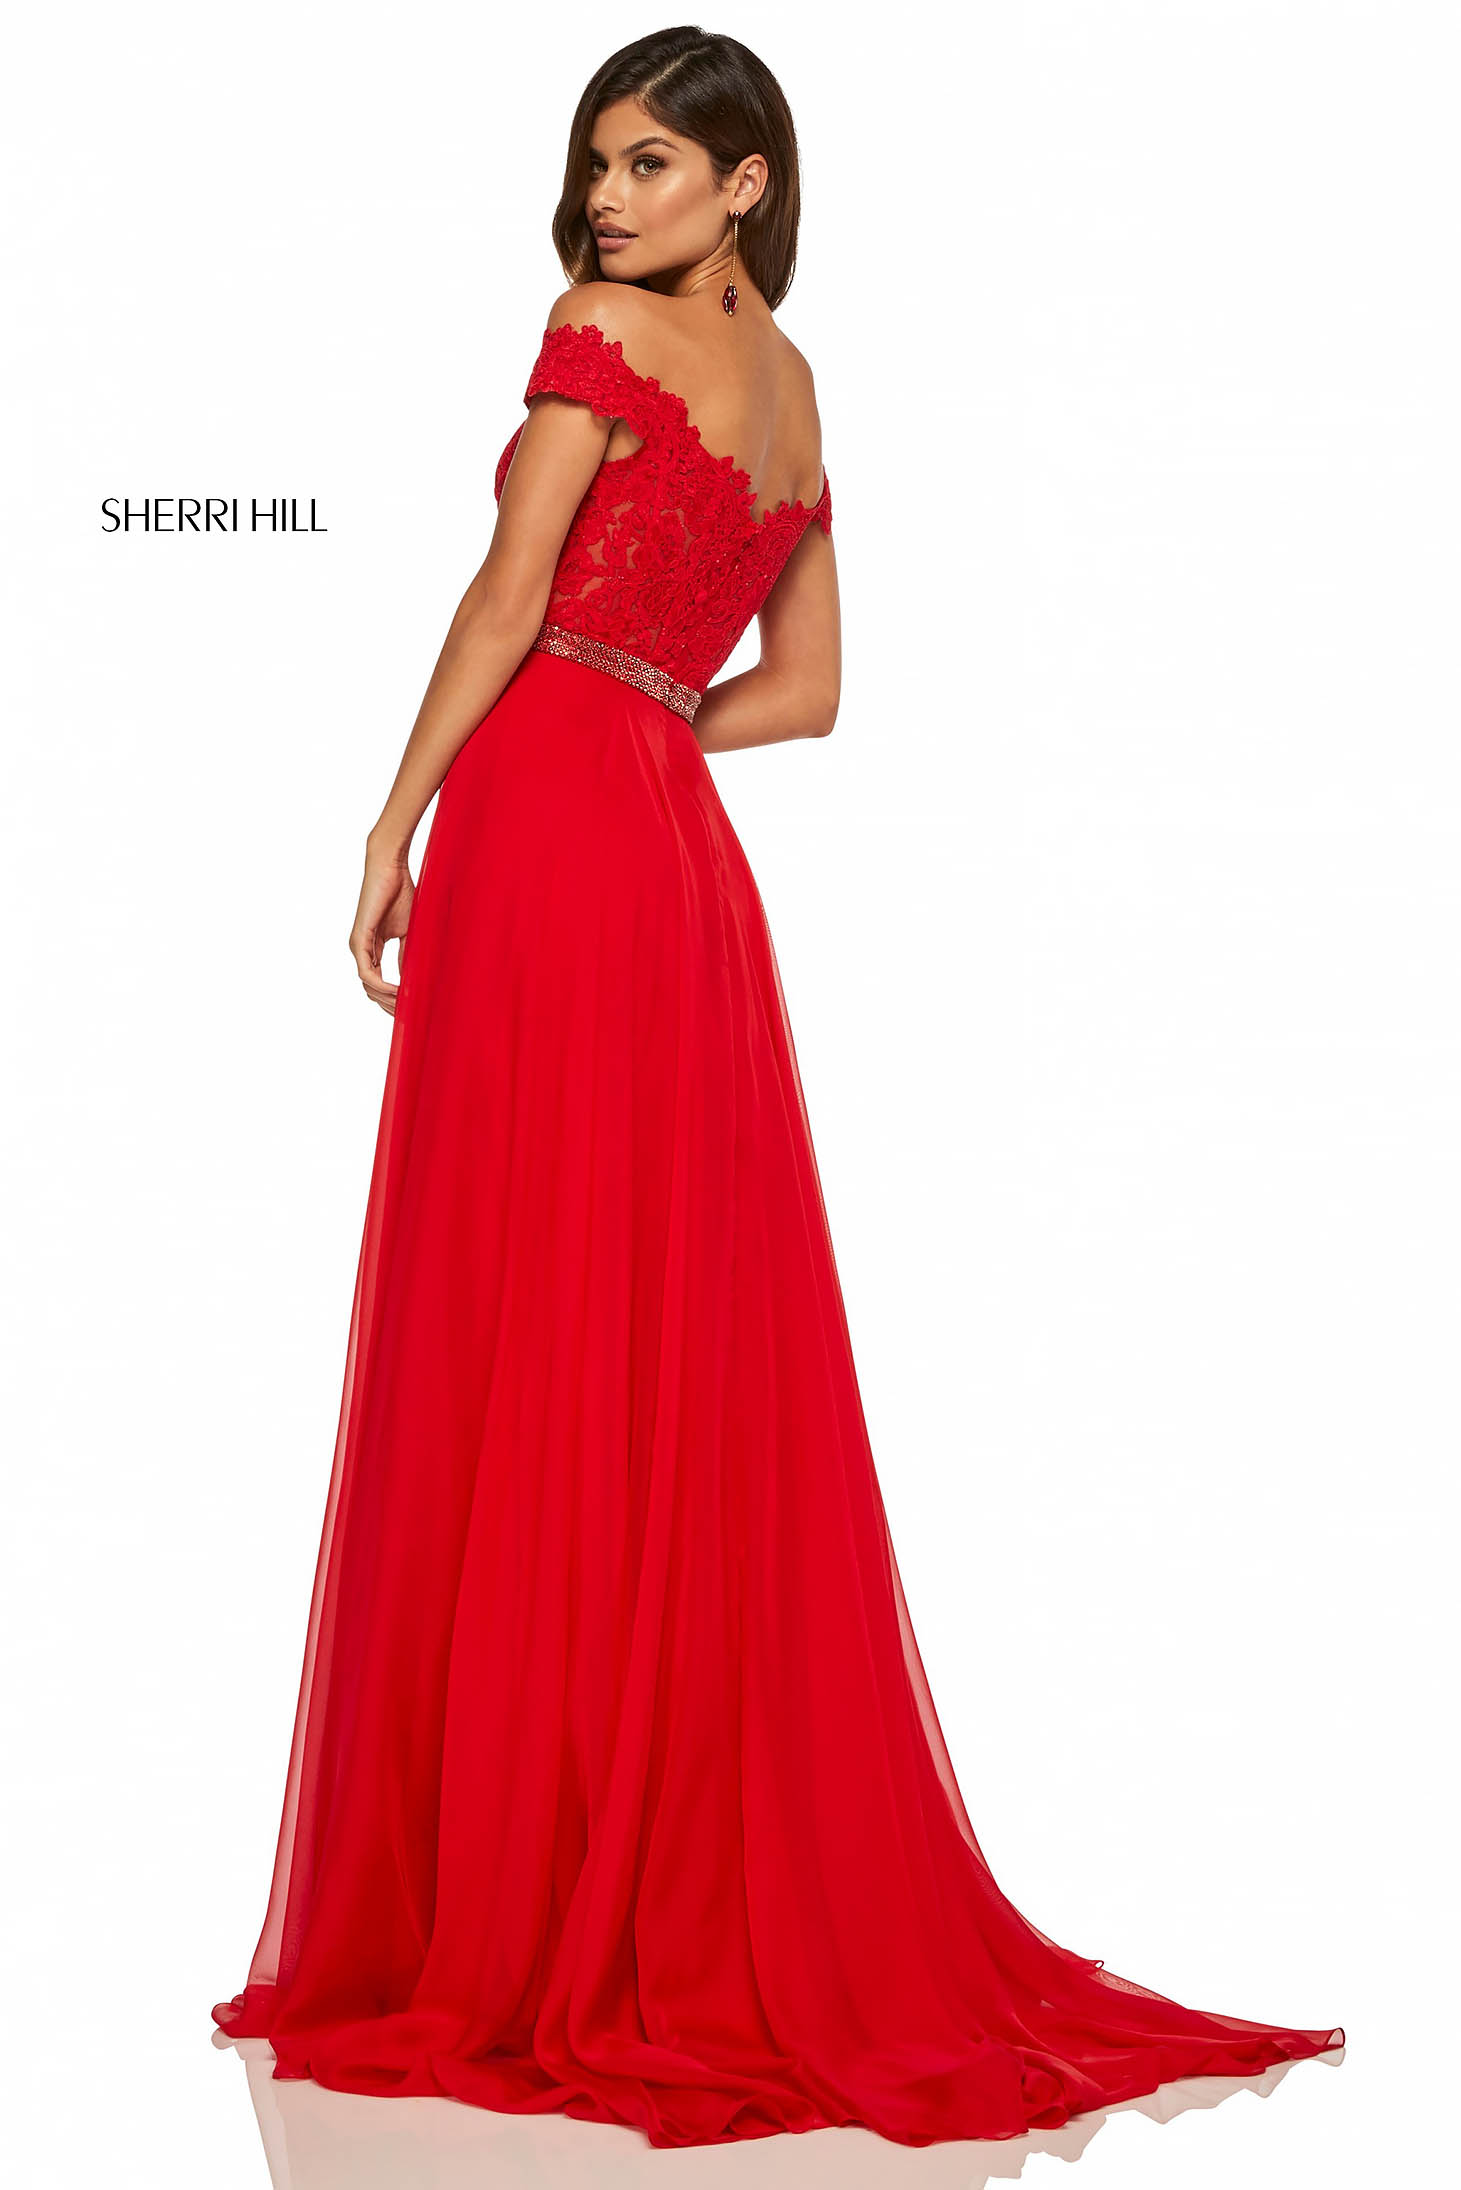 Sherri Hill 52729 Red Dress 2 - StarShinerS.com